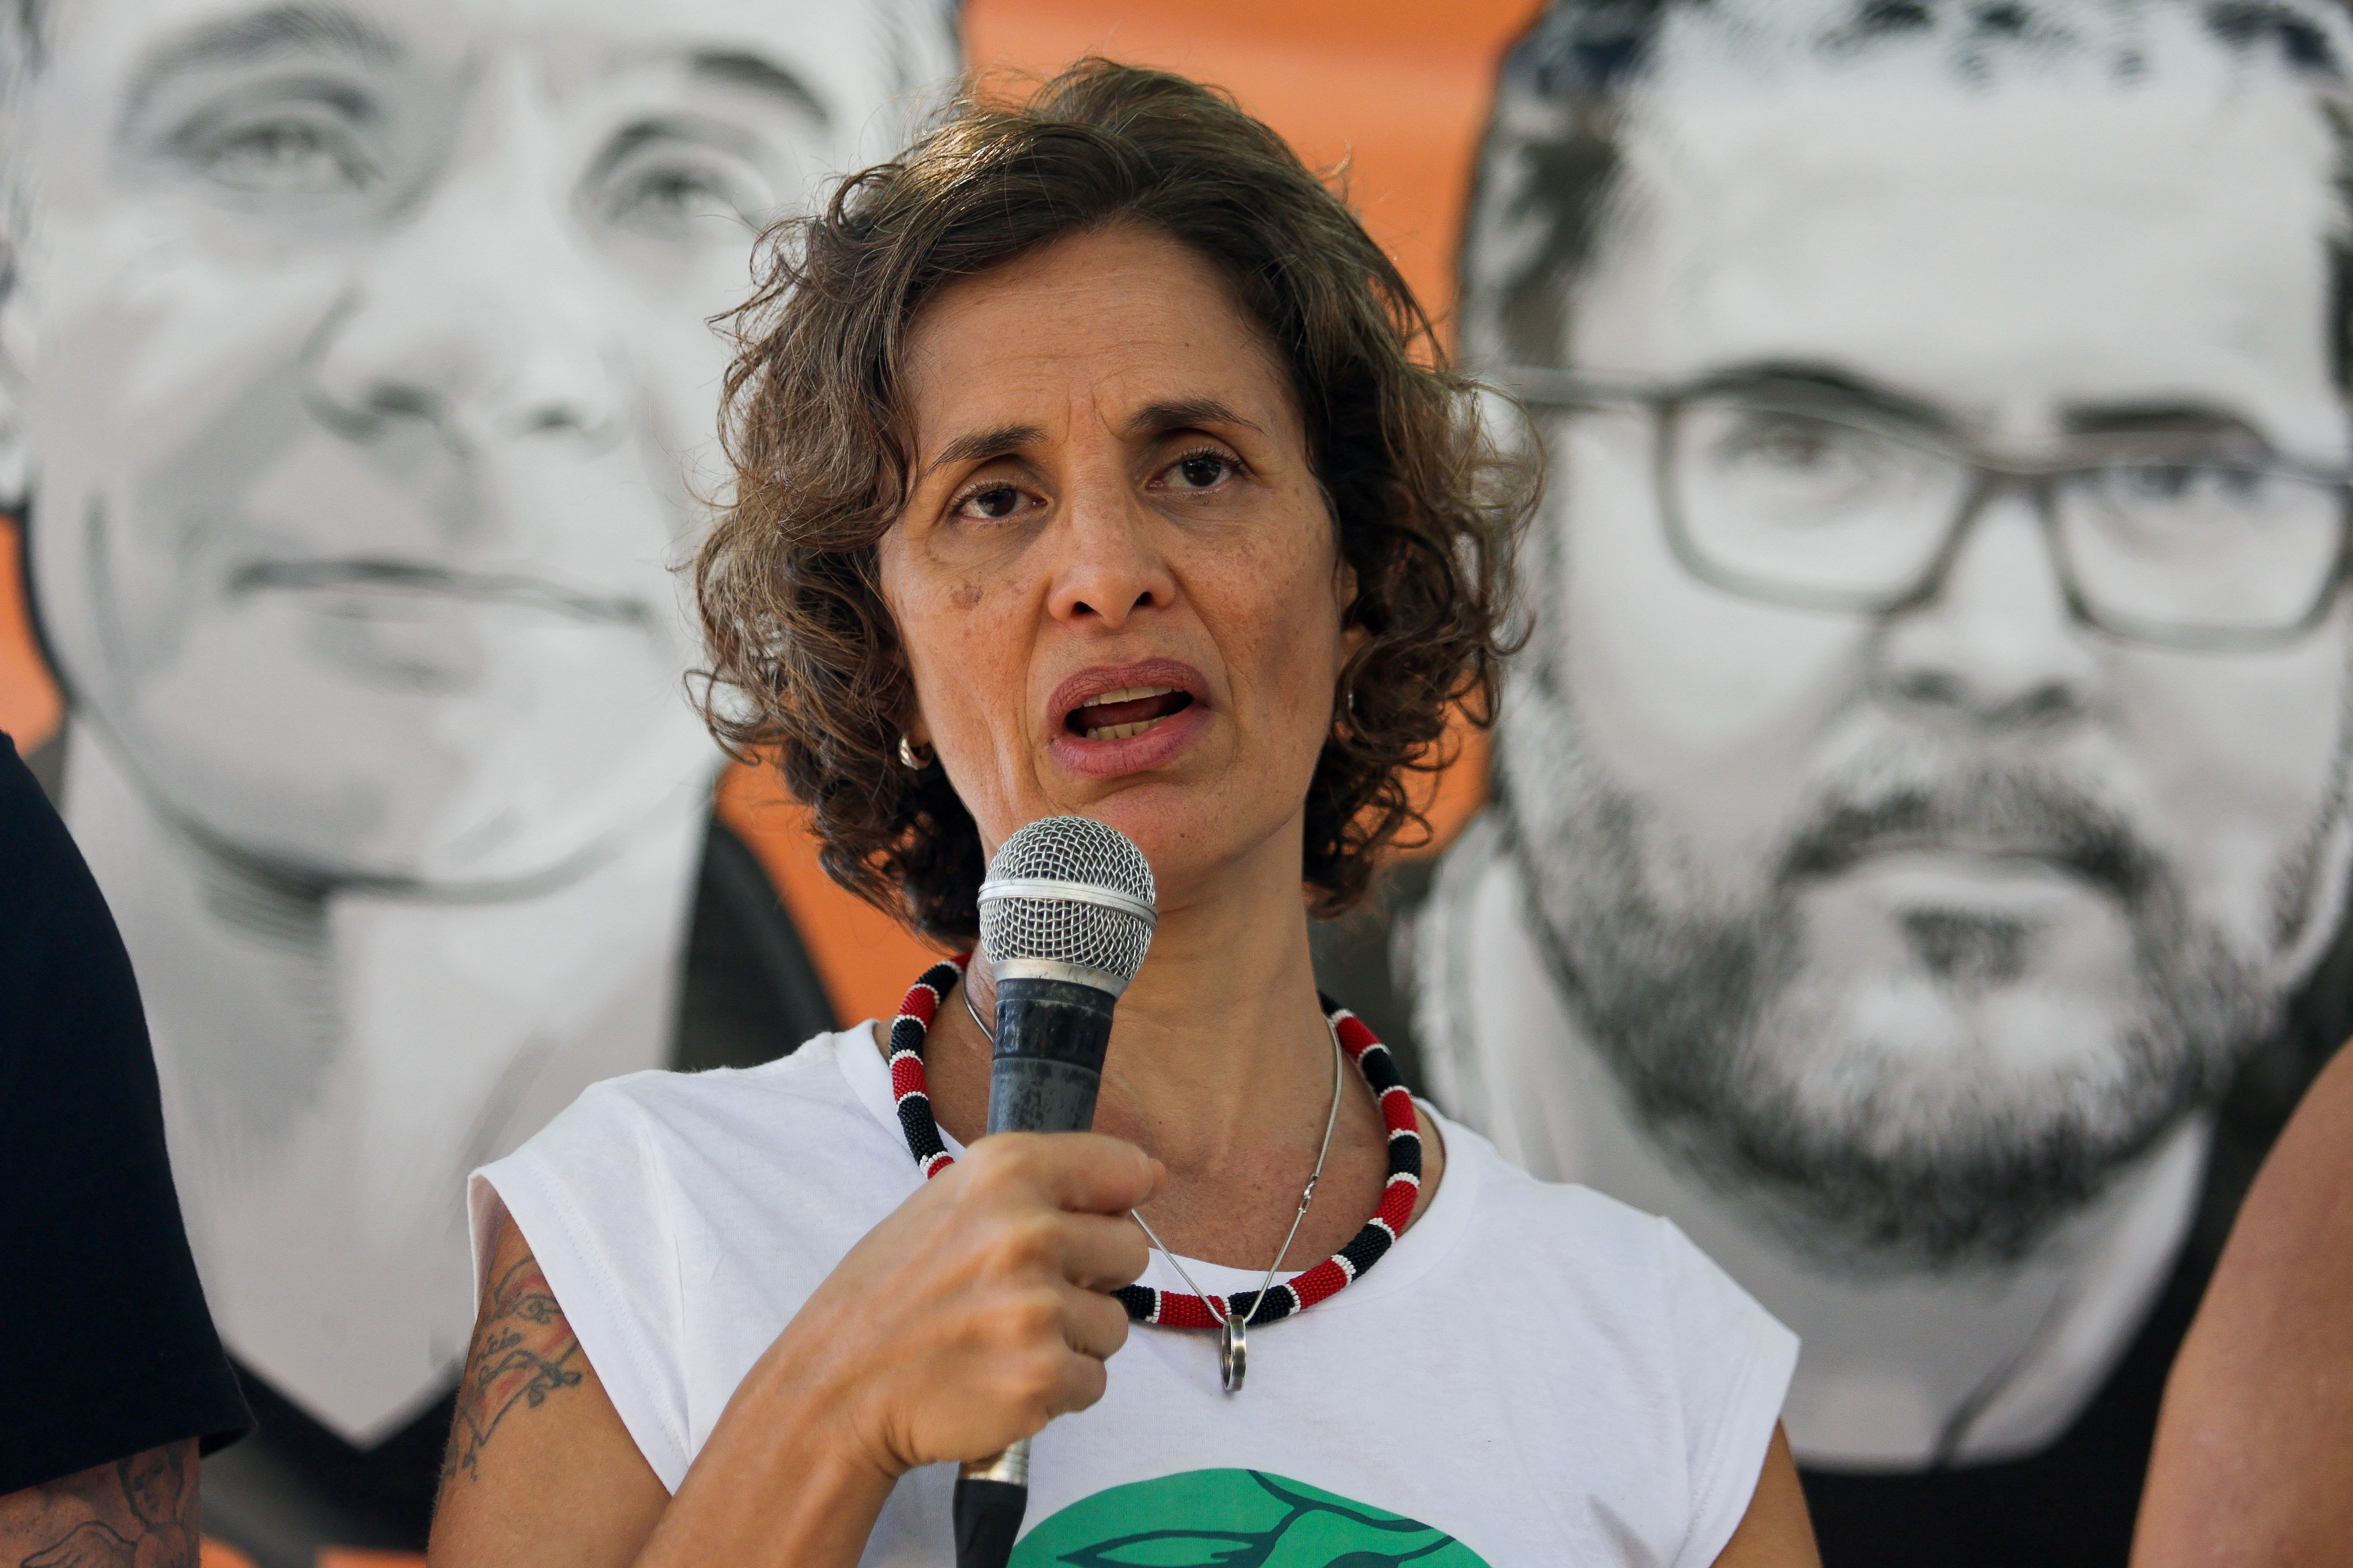 Alessandra Sampaio, widow of British journalist Dom Phillips, speaks during the tribute in Rio de Janeiro (REUTERS / Pilar Olivares)